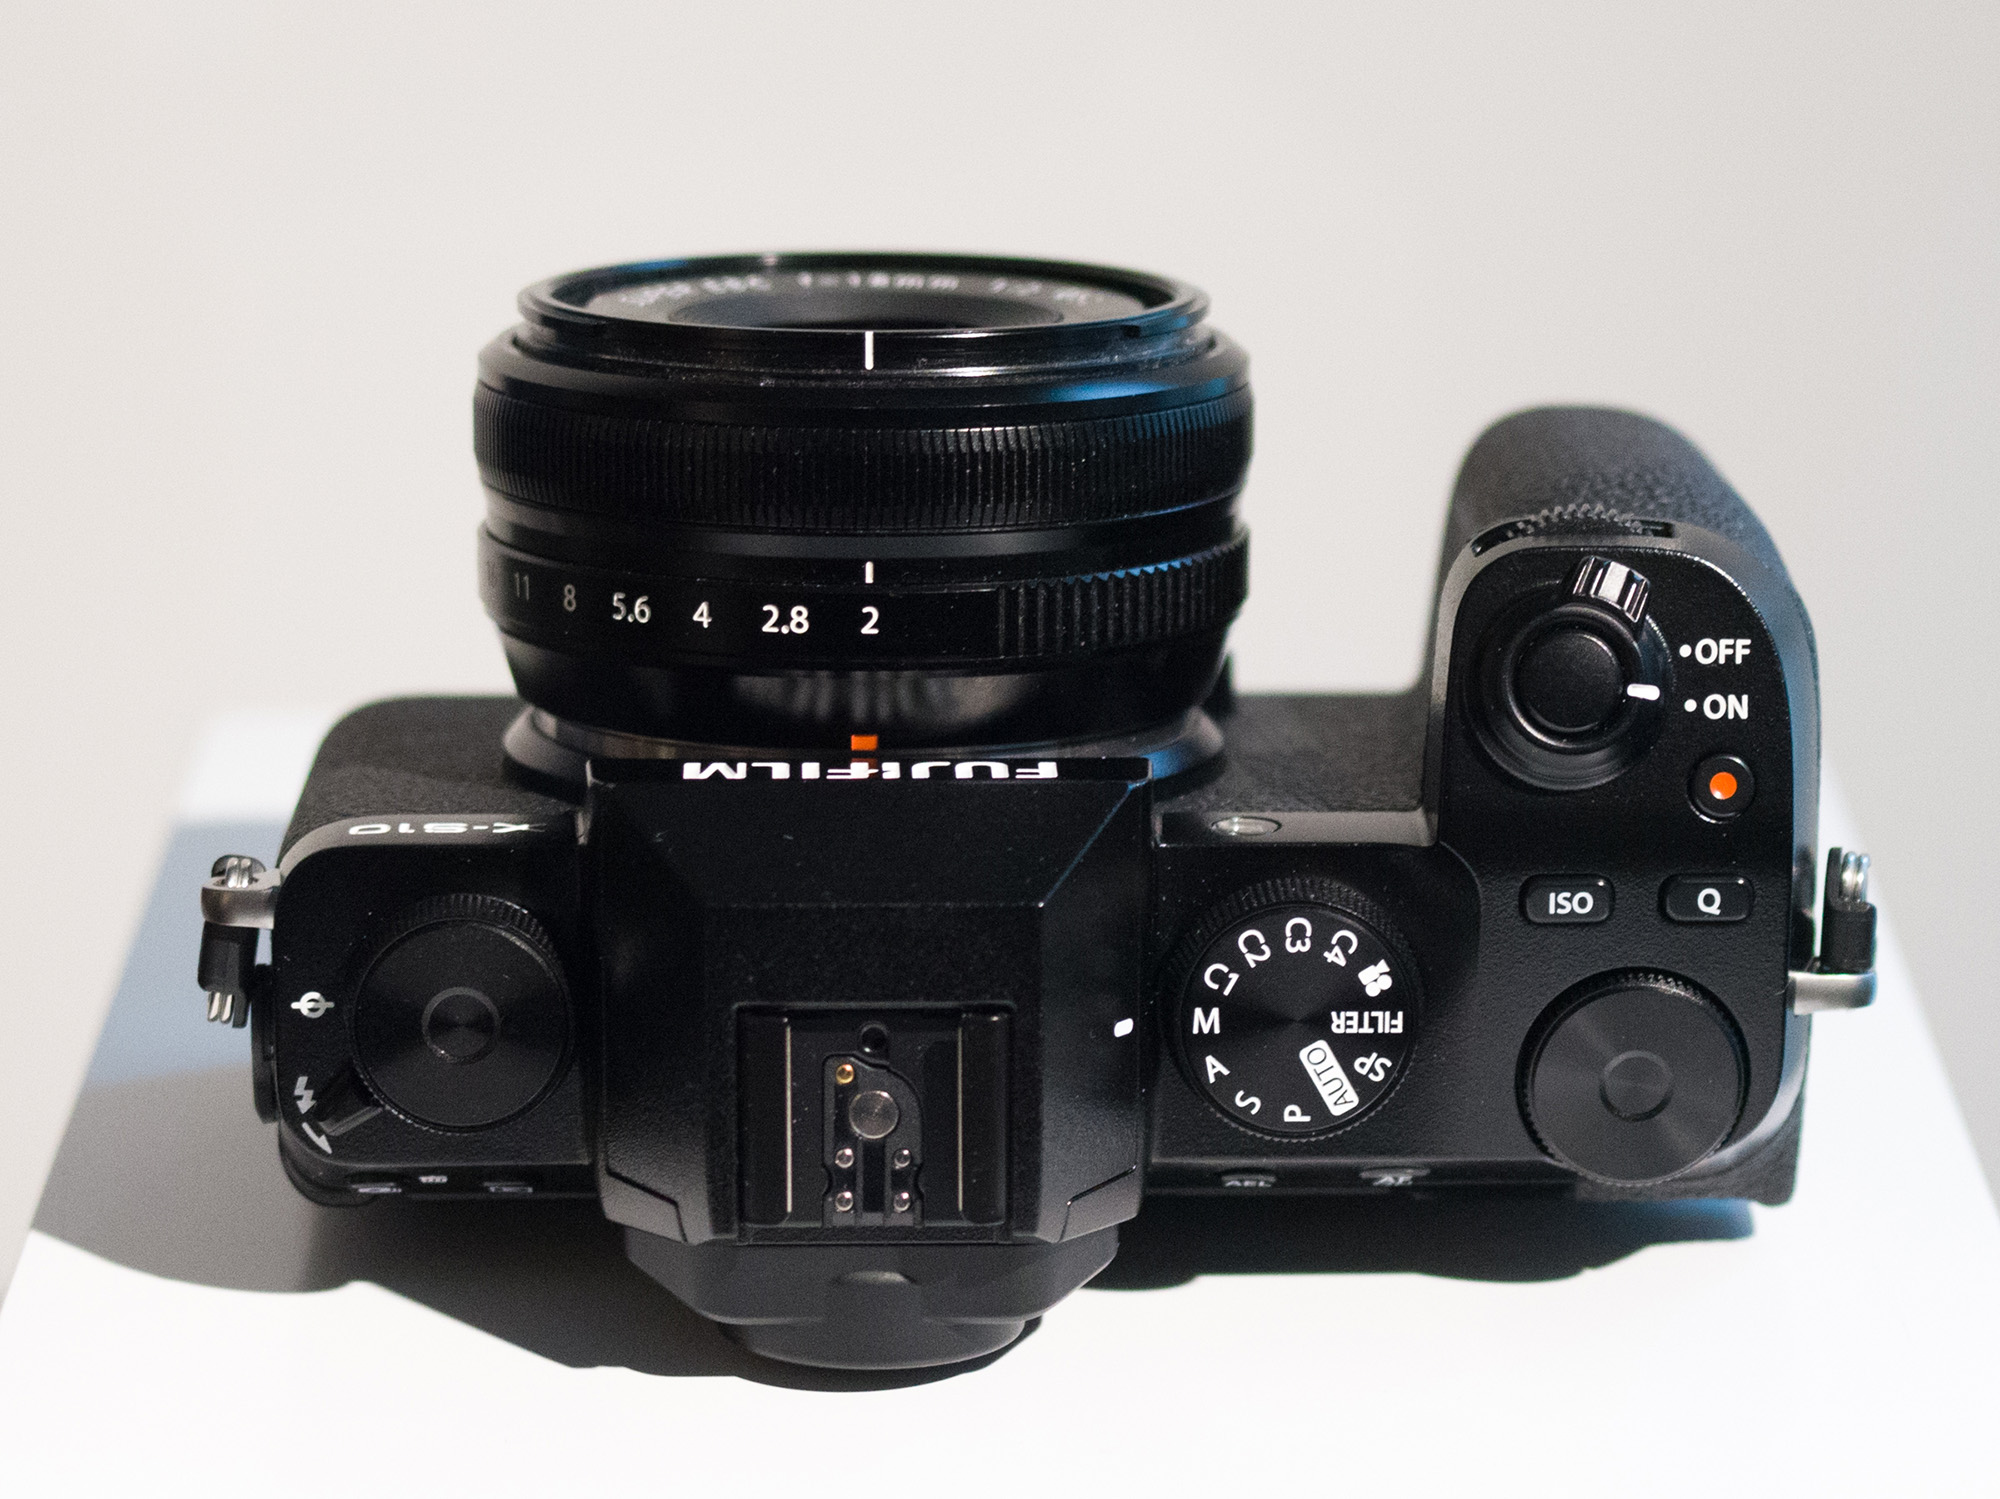 Fujifilm X-S10 APS-C Mirrorless Camera Review - Finding Range